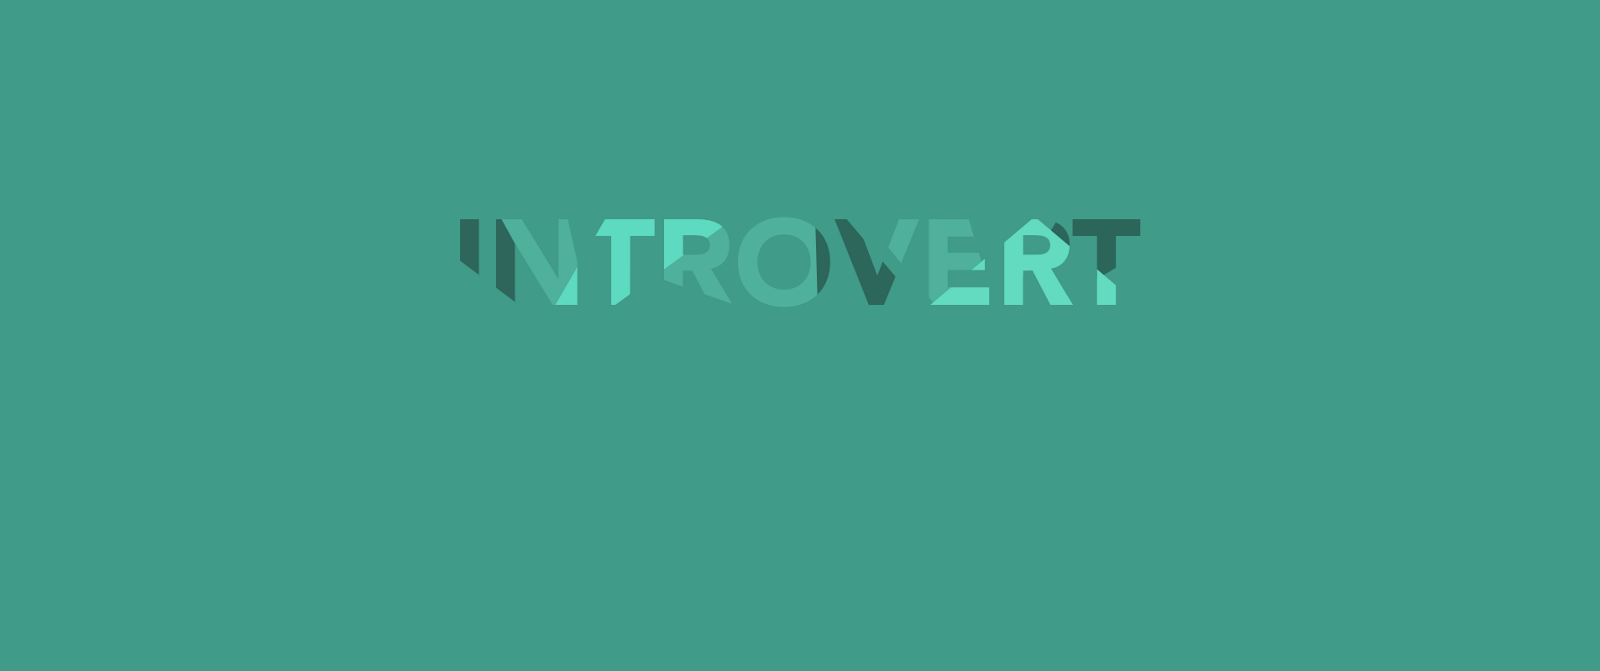 Introvert backdrop